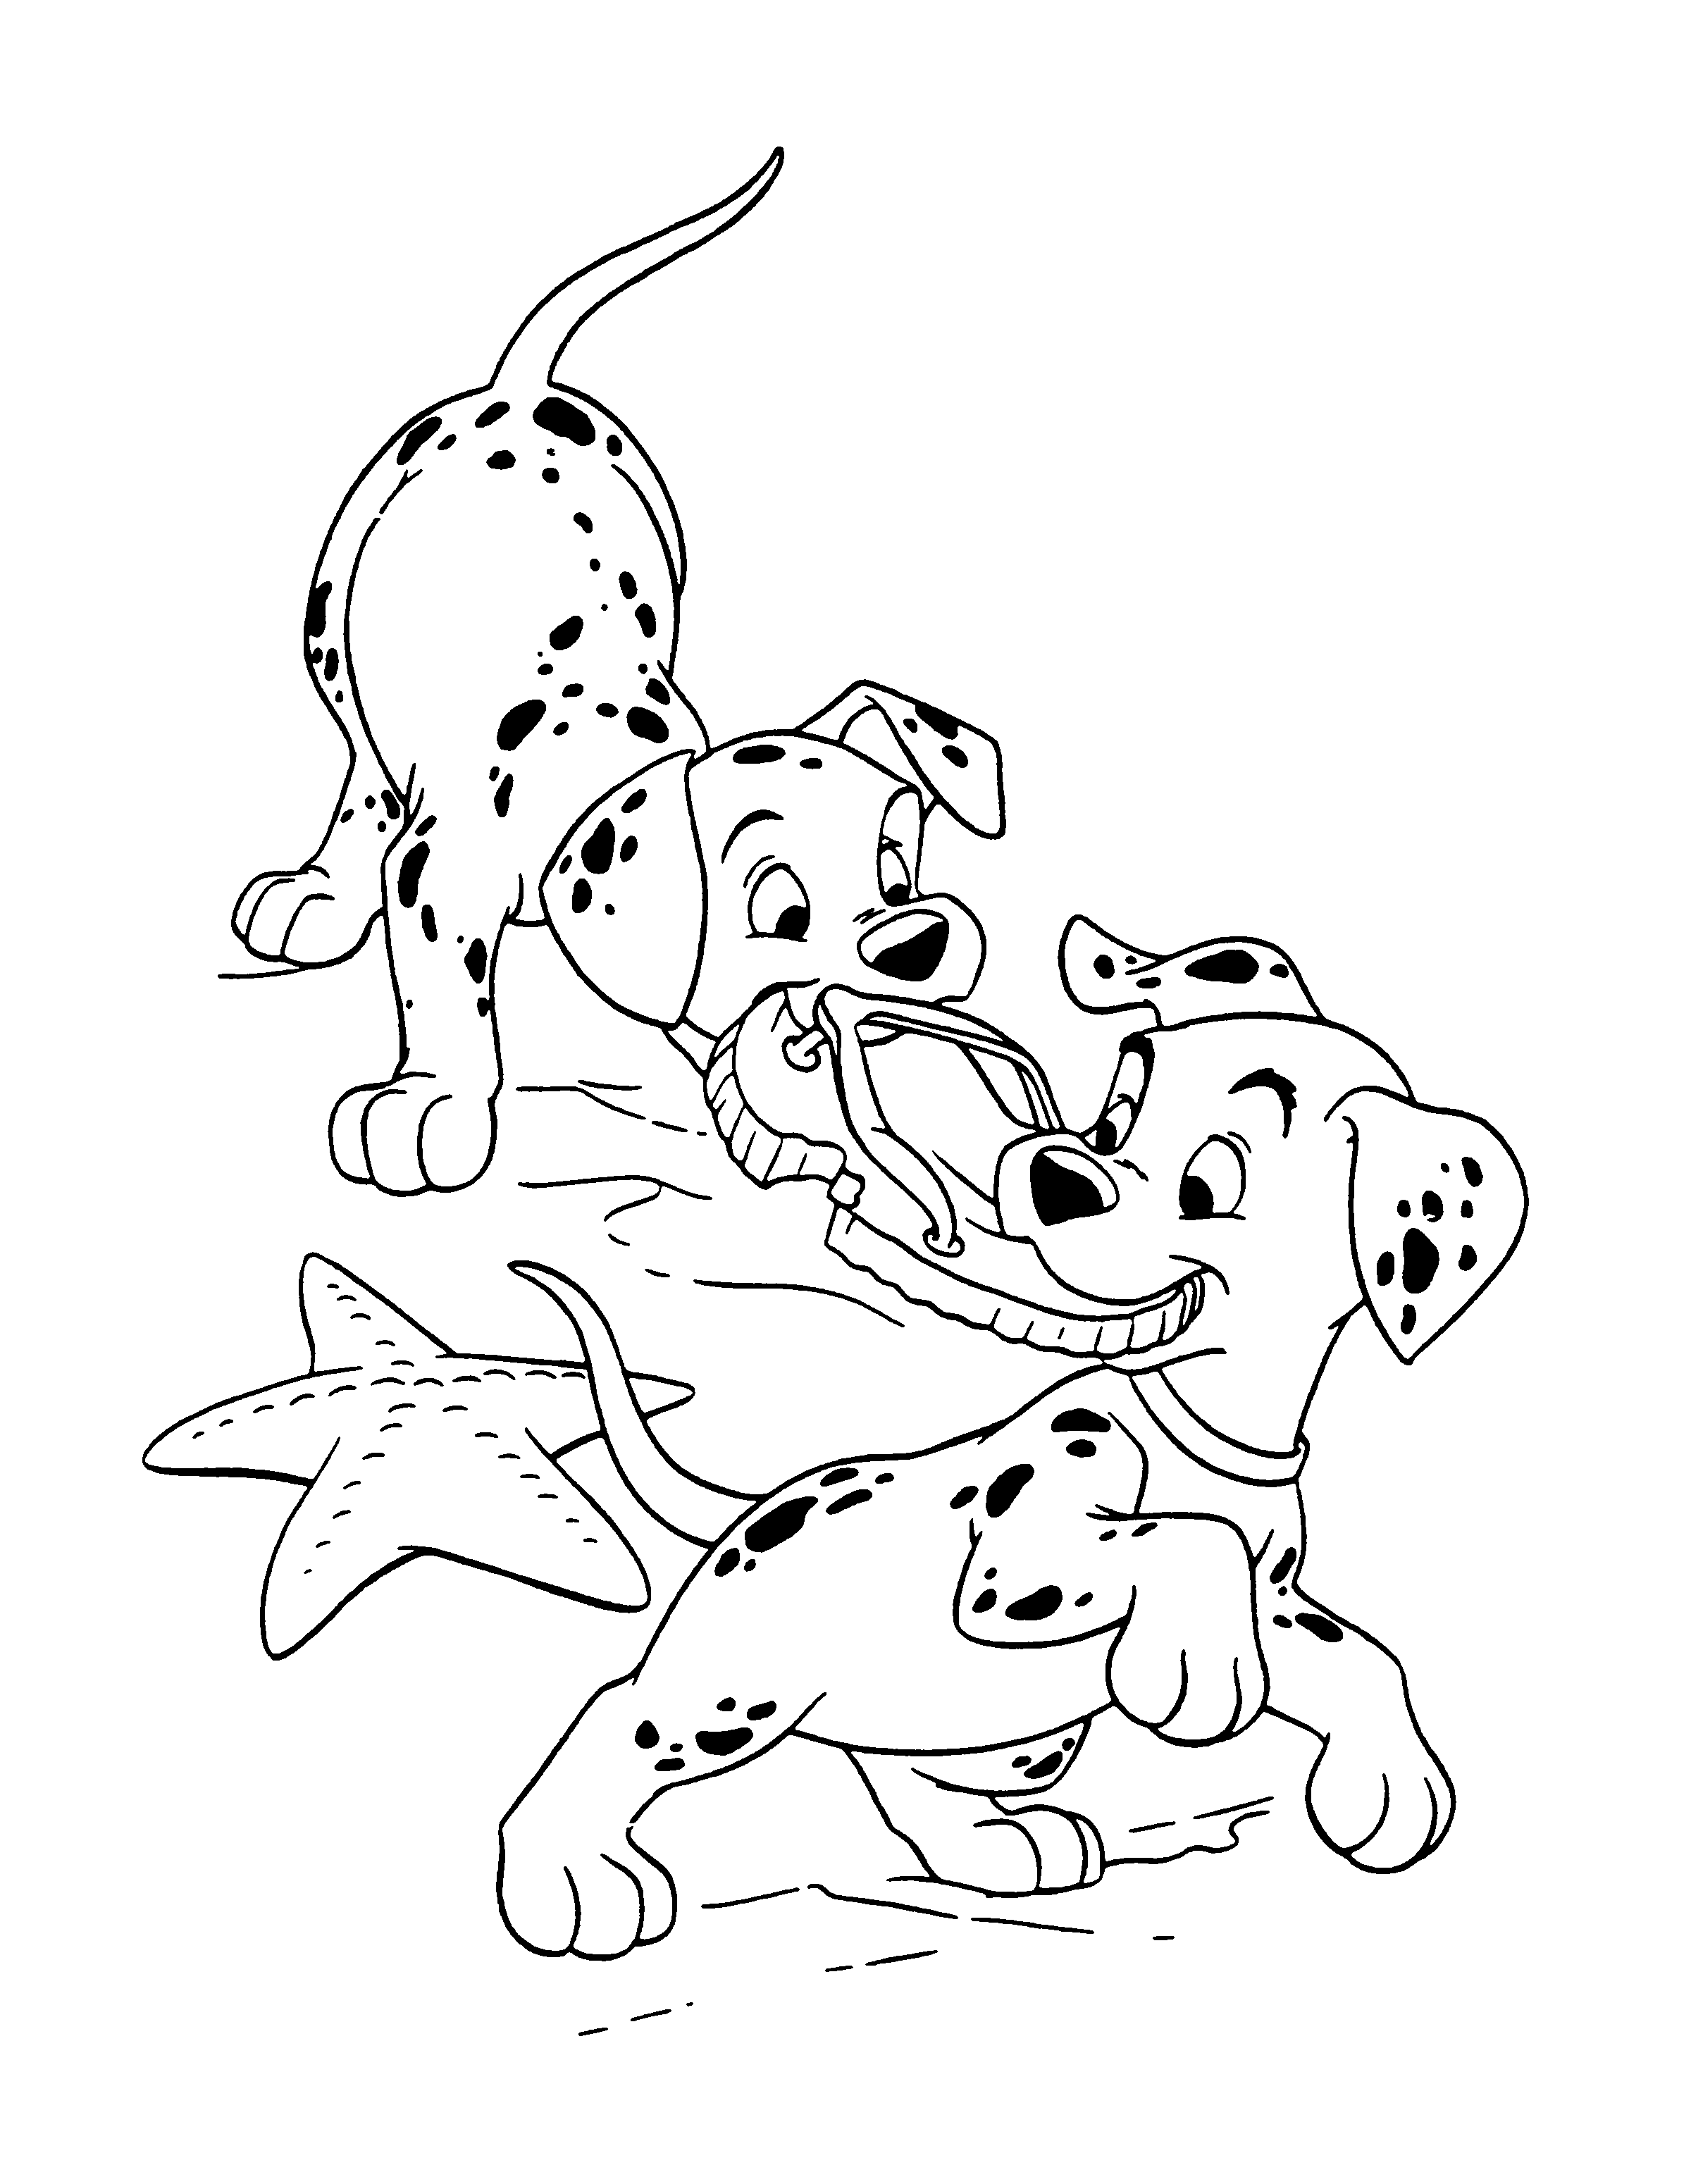 102 Dalmatians Coloring Pages Cartoons 102 dalmatians 64 Printable 2020 0101 Coloring4free